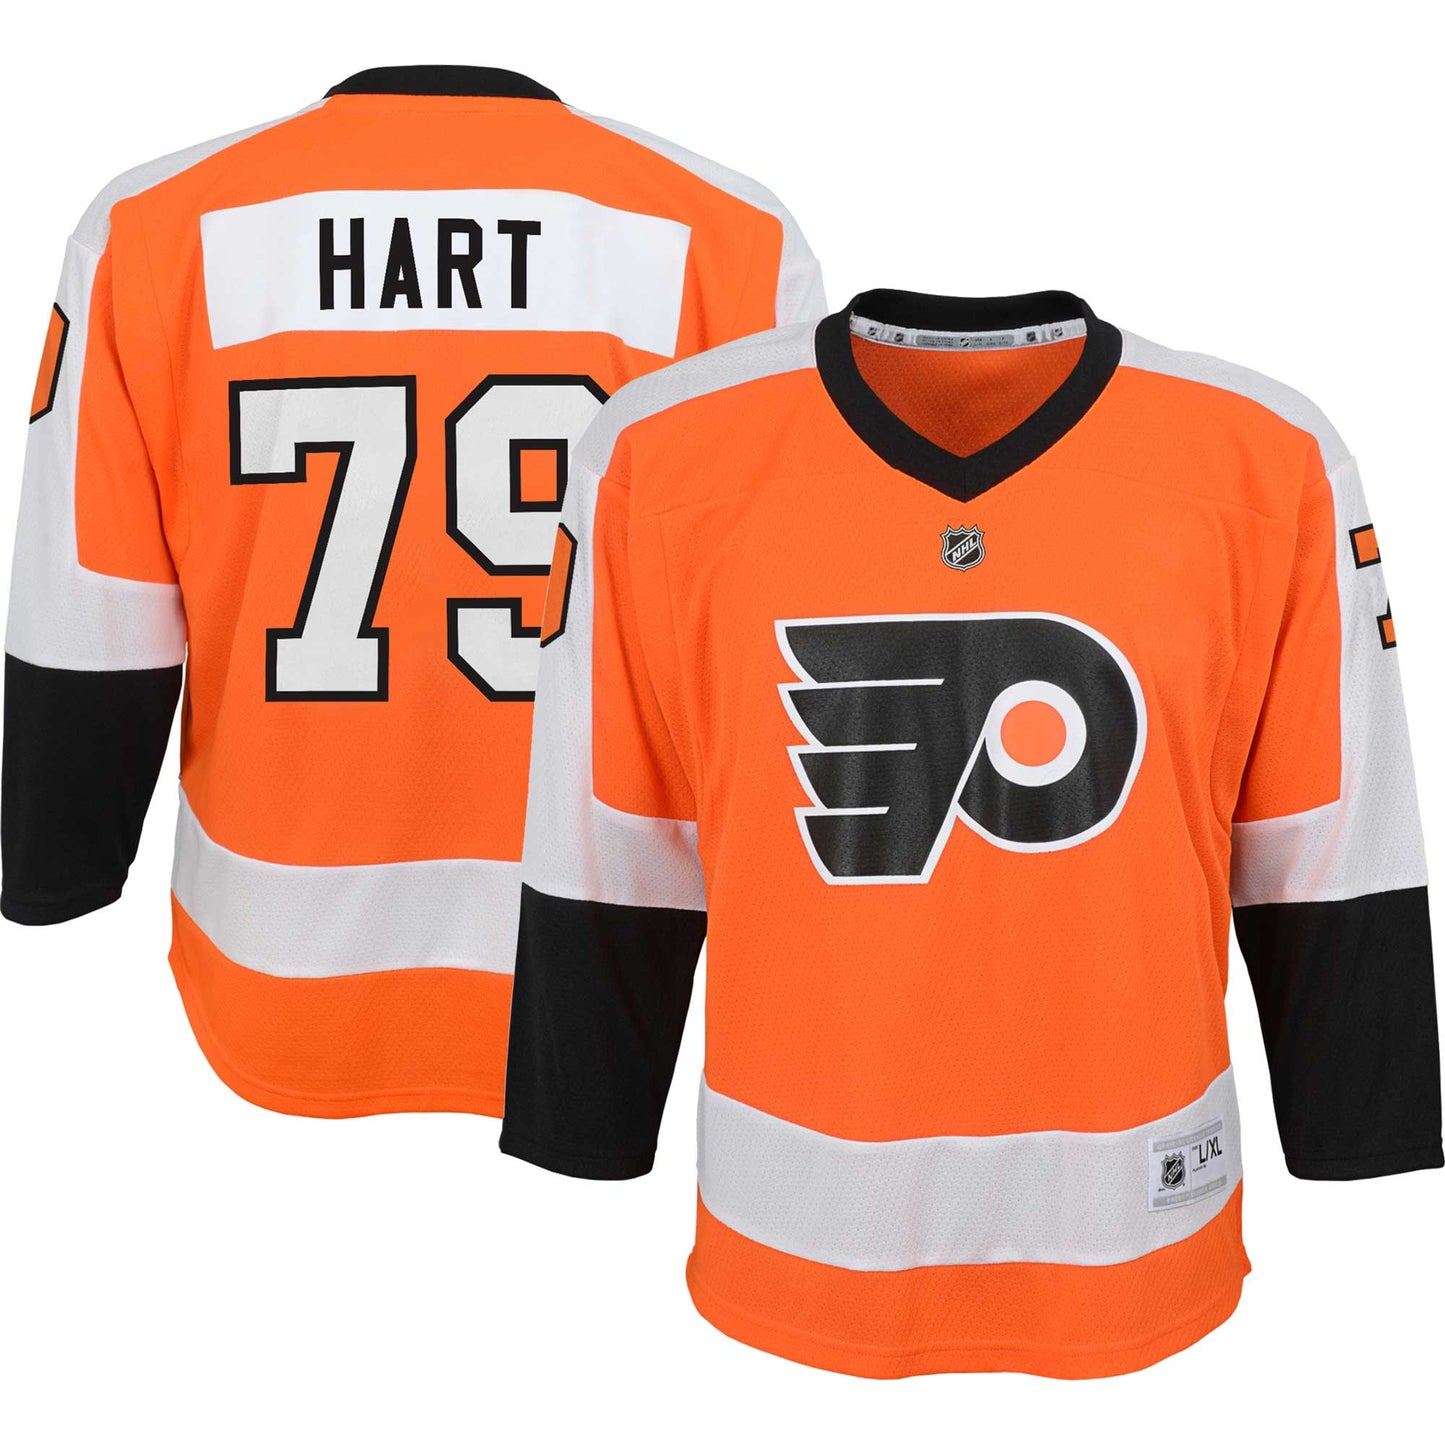 Carter Hart Philadelphia Flyers Youth Home Replica Player Jersey - Orange